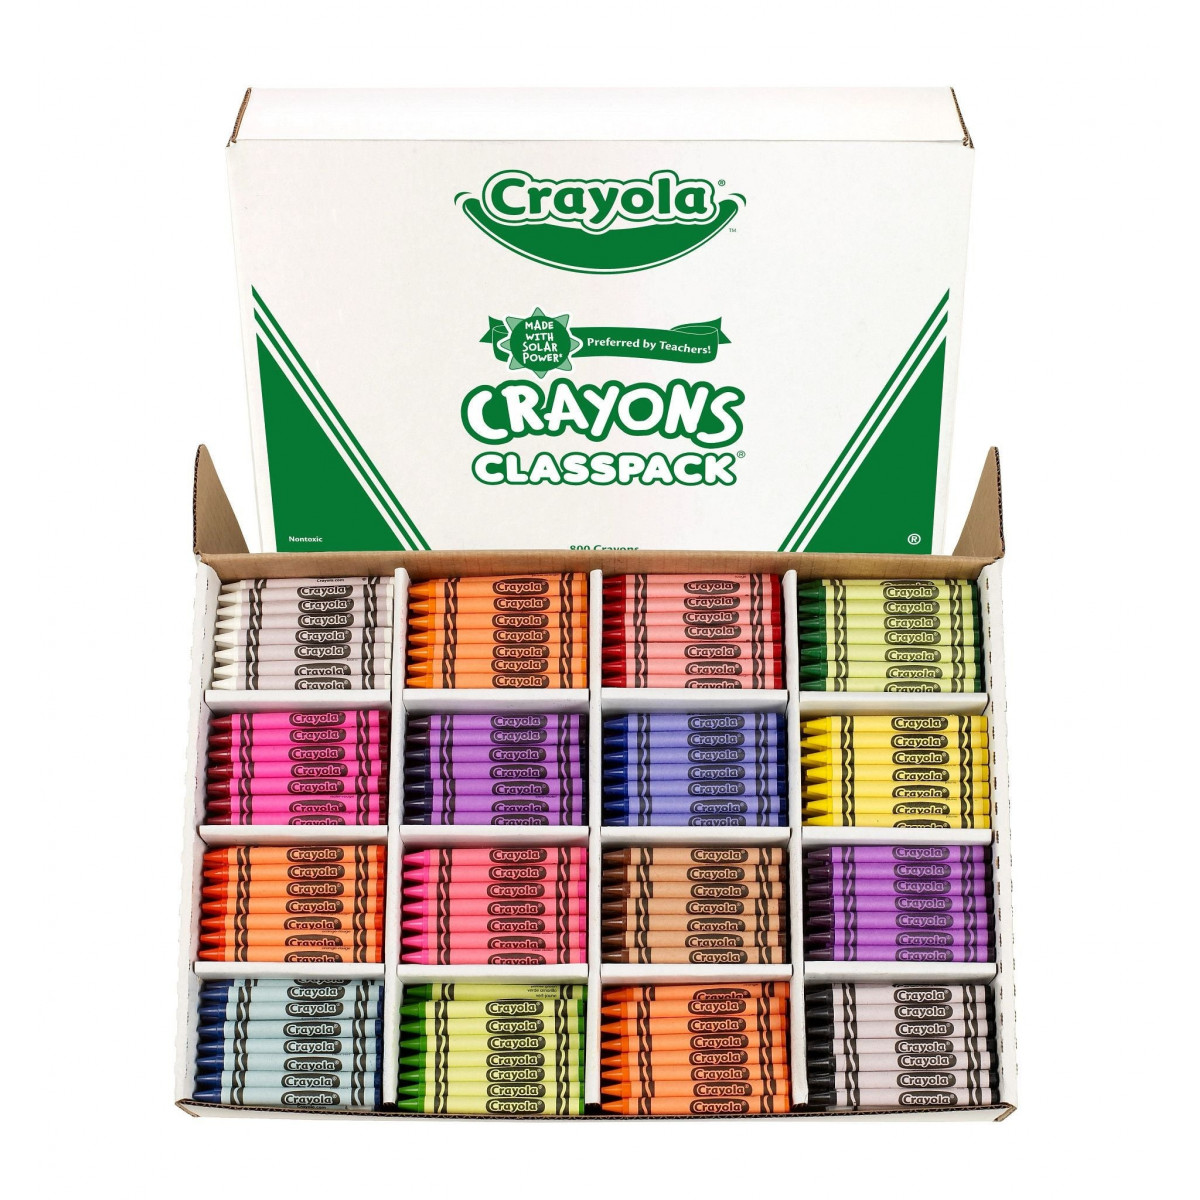 Crayola Glitter Crayons - 8 Count